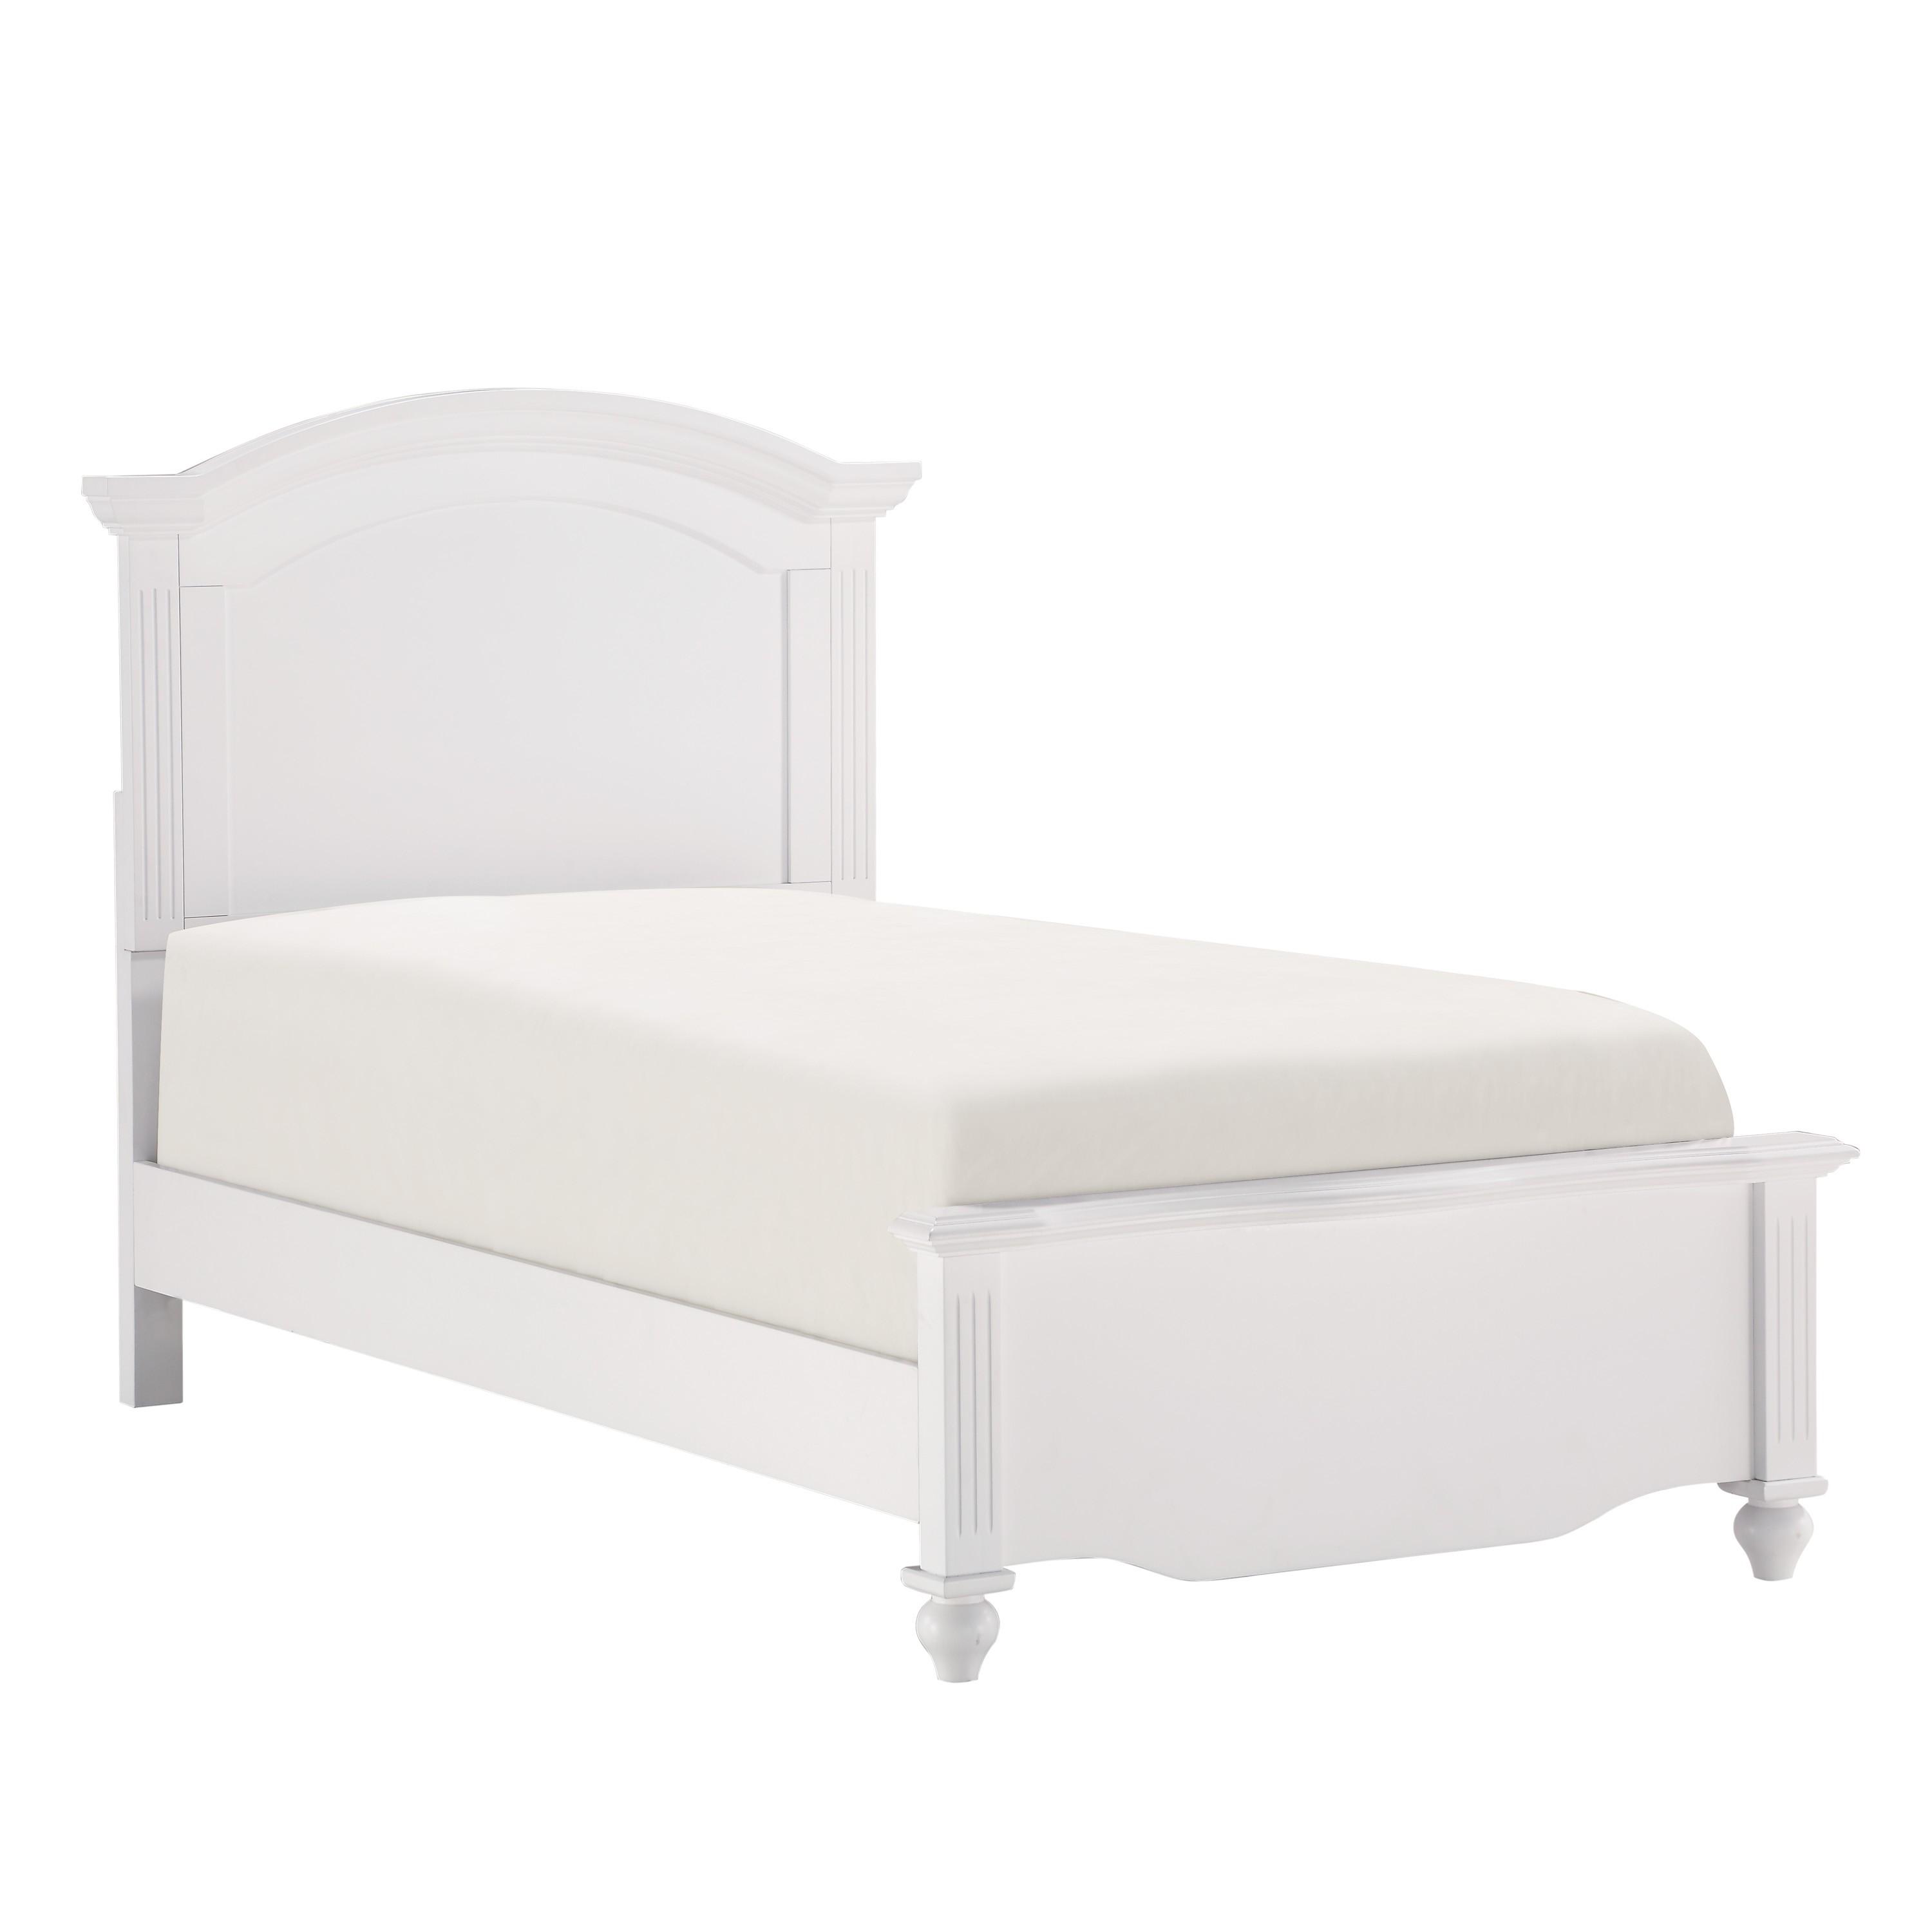 

    
Transitional White Wood Twin Bedroom Set 5pcs Homelegance 2058WHT-1* Meghan
